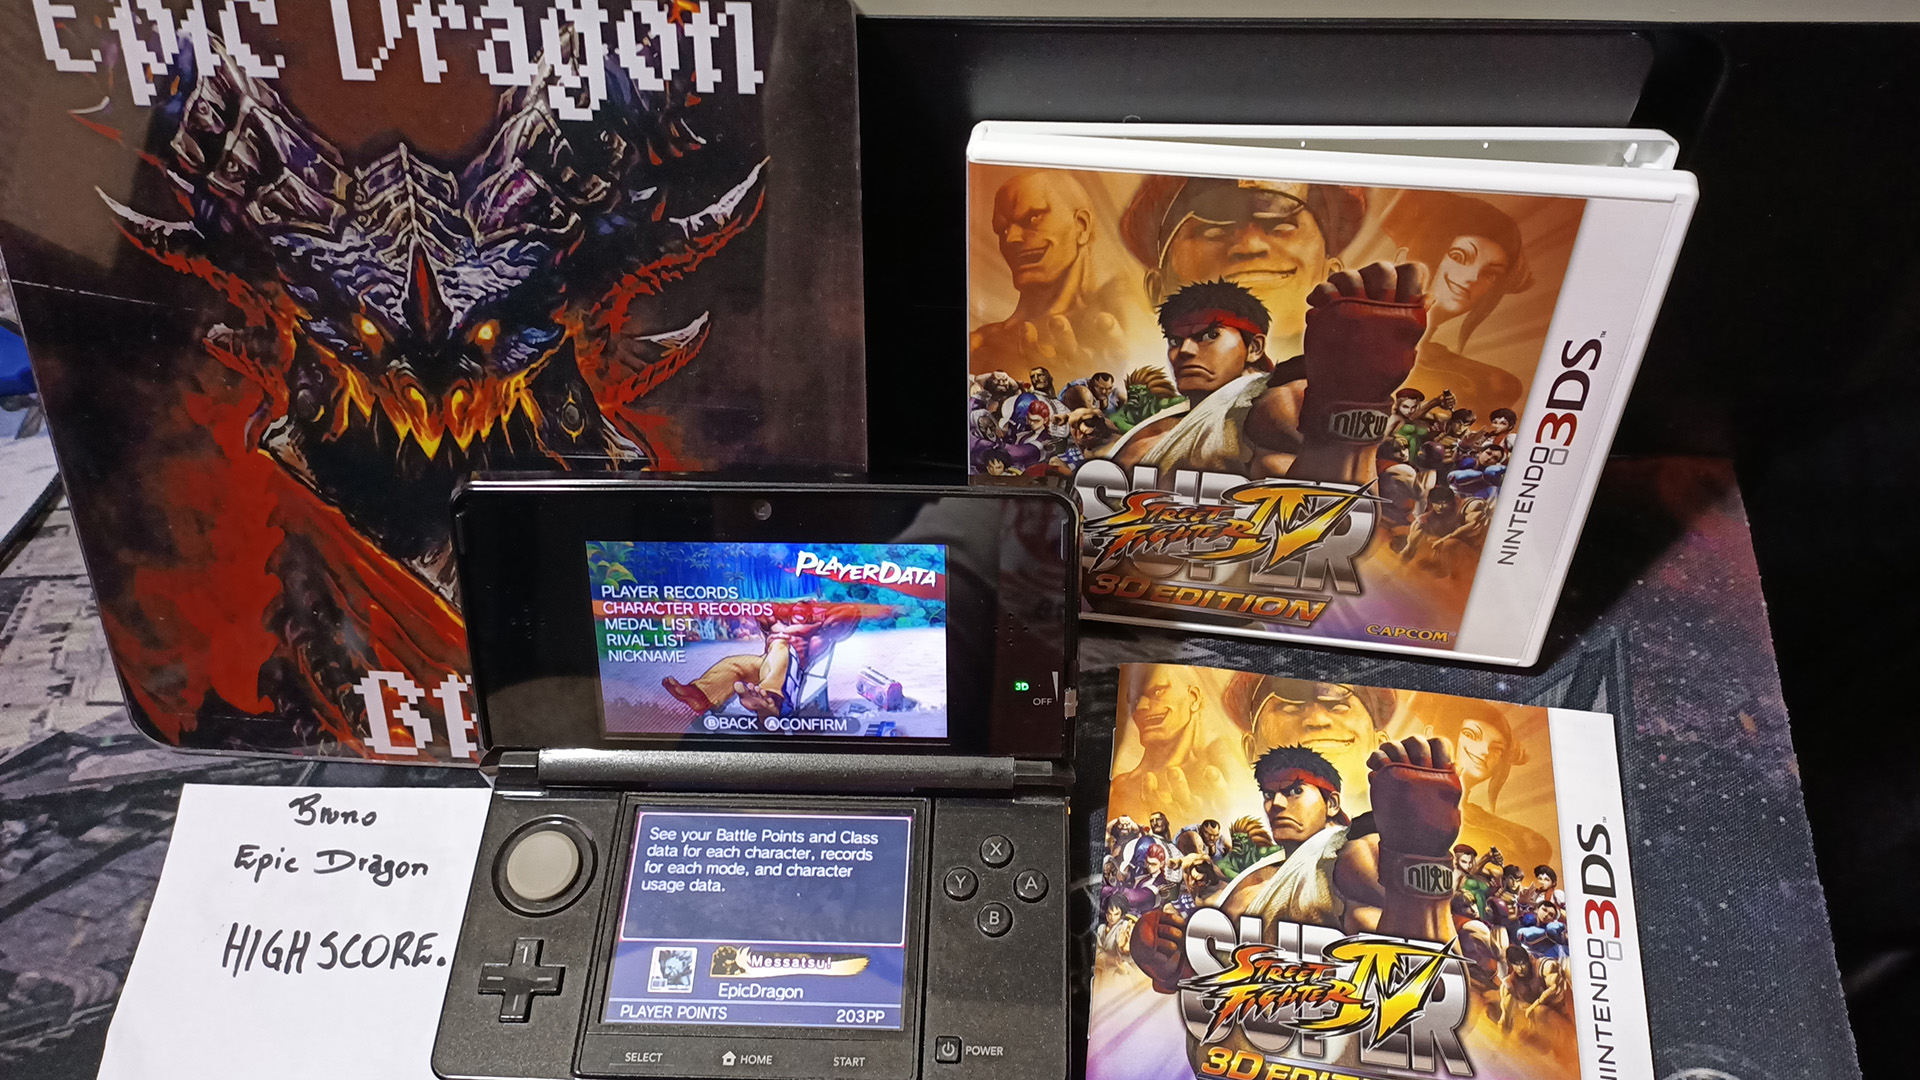 EpicDragon: Super Street Fighter IV 3D Edition: Challenge: Car Crusher: El Fuerte (Nintendo 3DS) 80,900 points on 2022-08-01 20:58:23